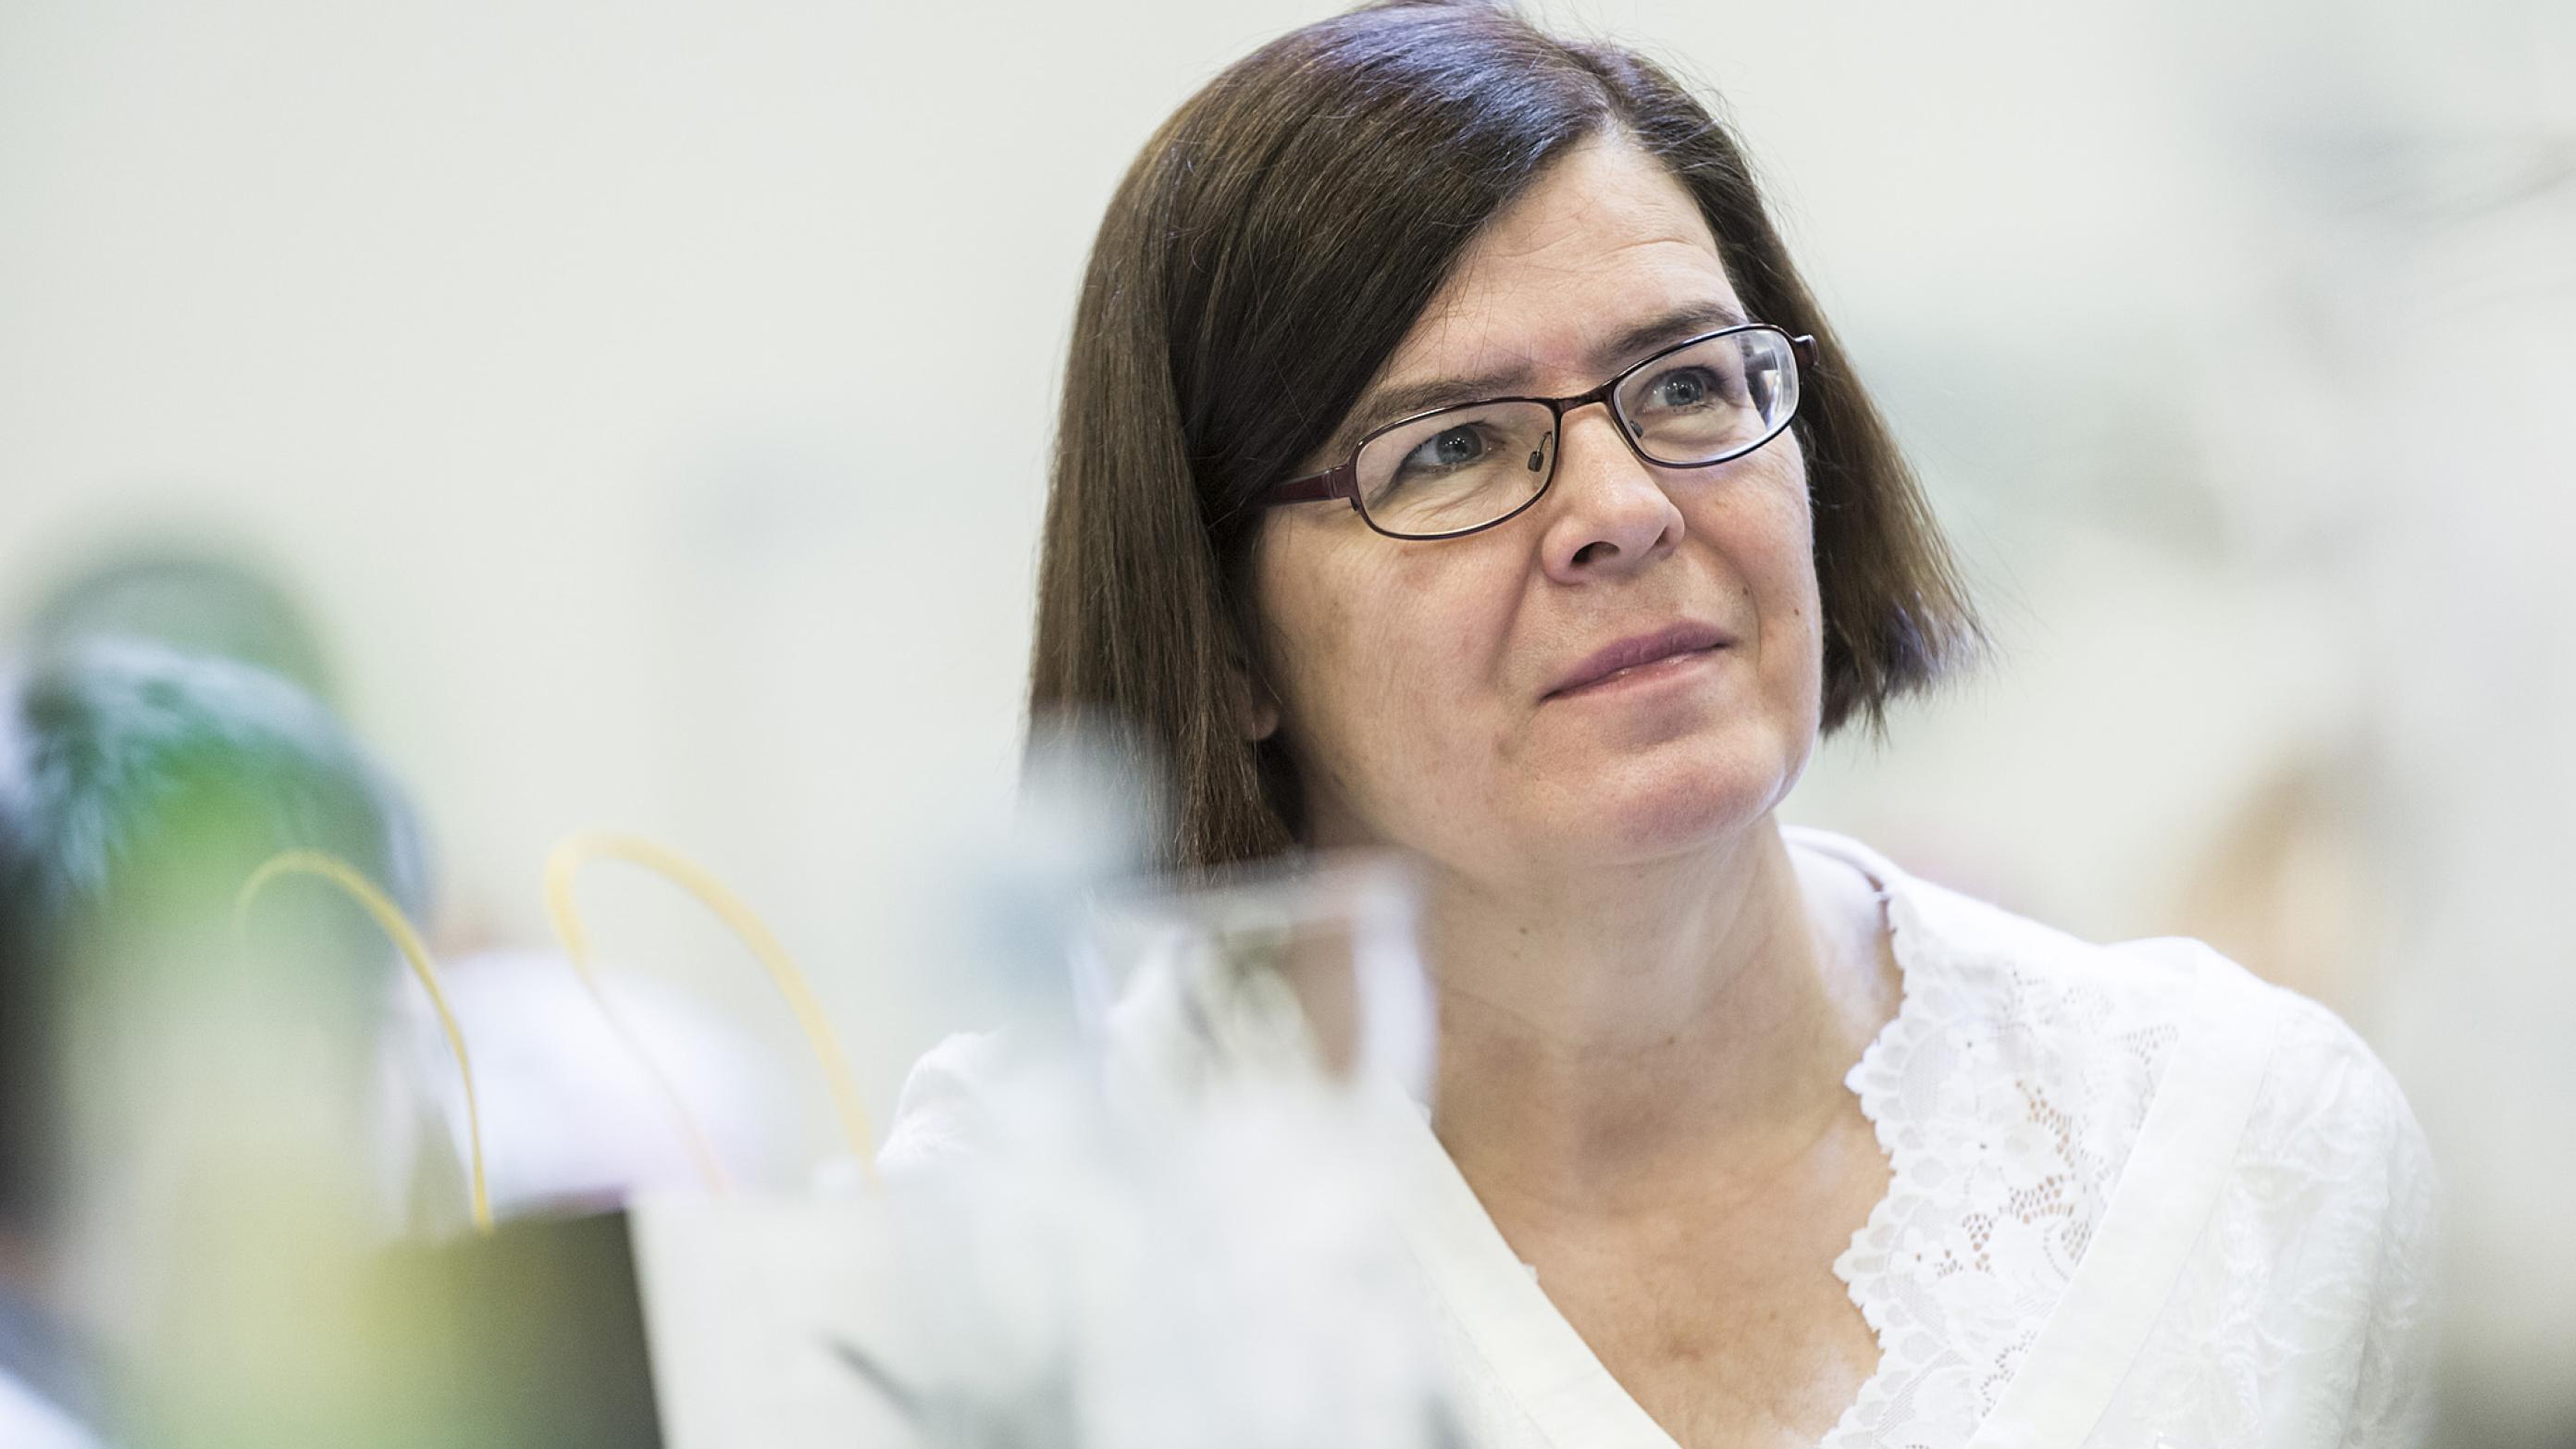 Lise Møller er formand for Etisk Udvalg i Lægeforeningen. Foto: Palle Peter Skov